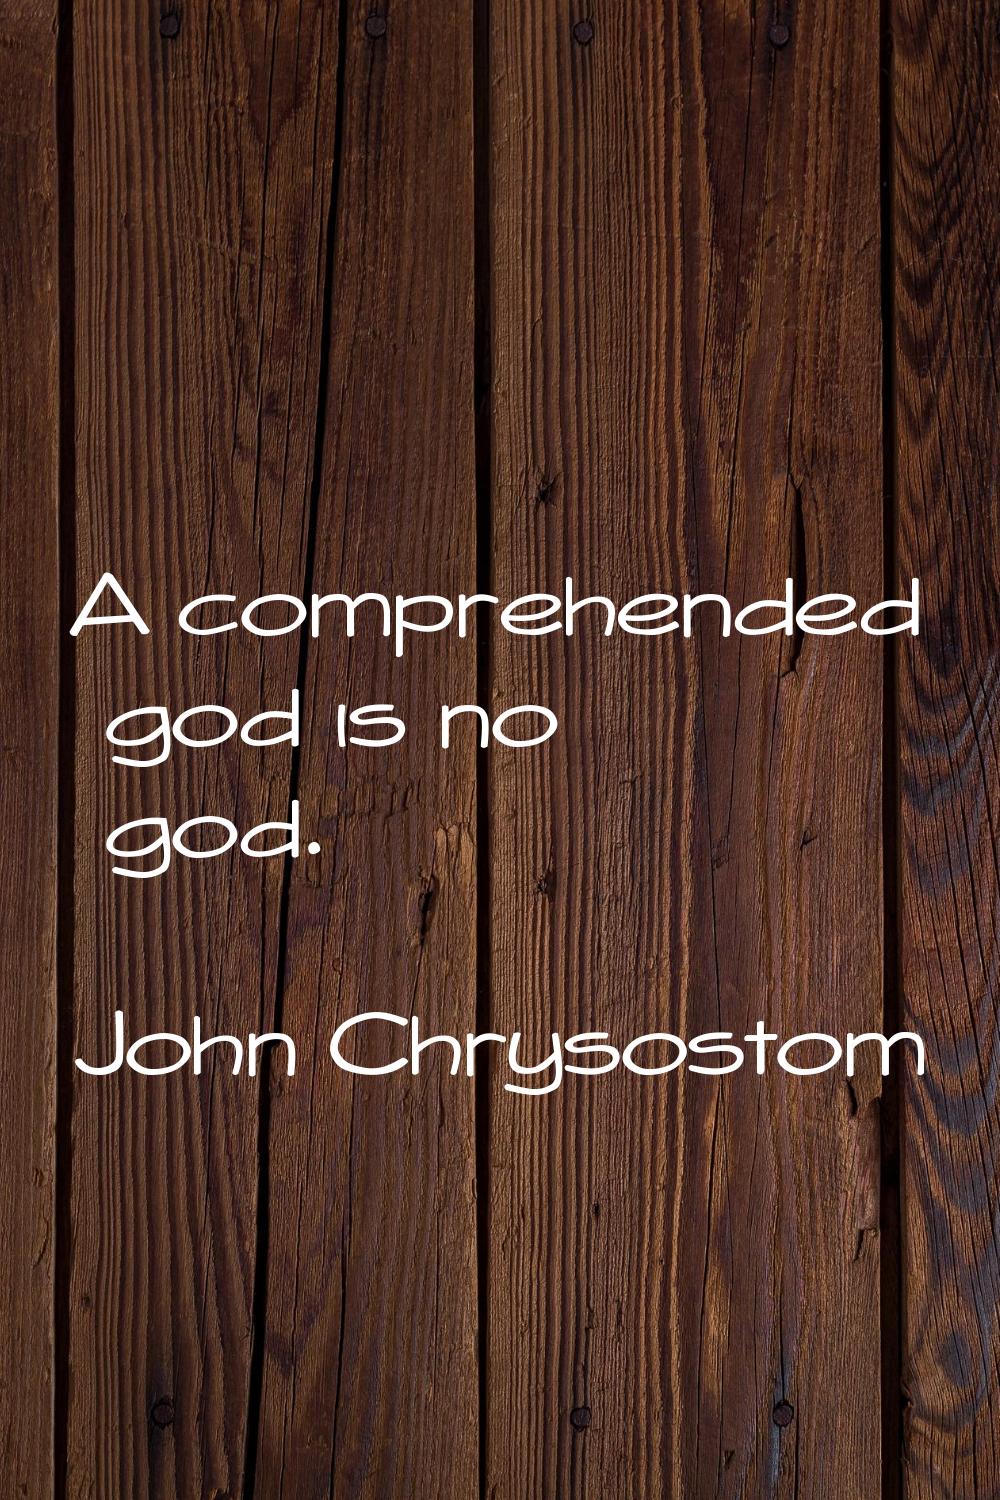 A comprehended god is no god.